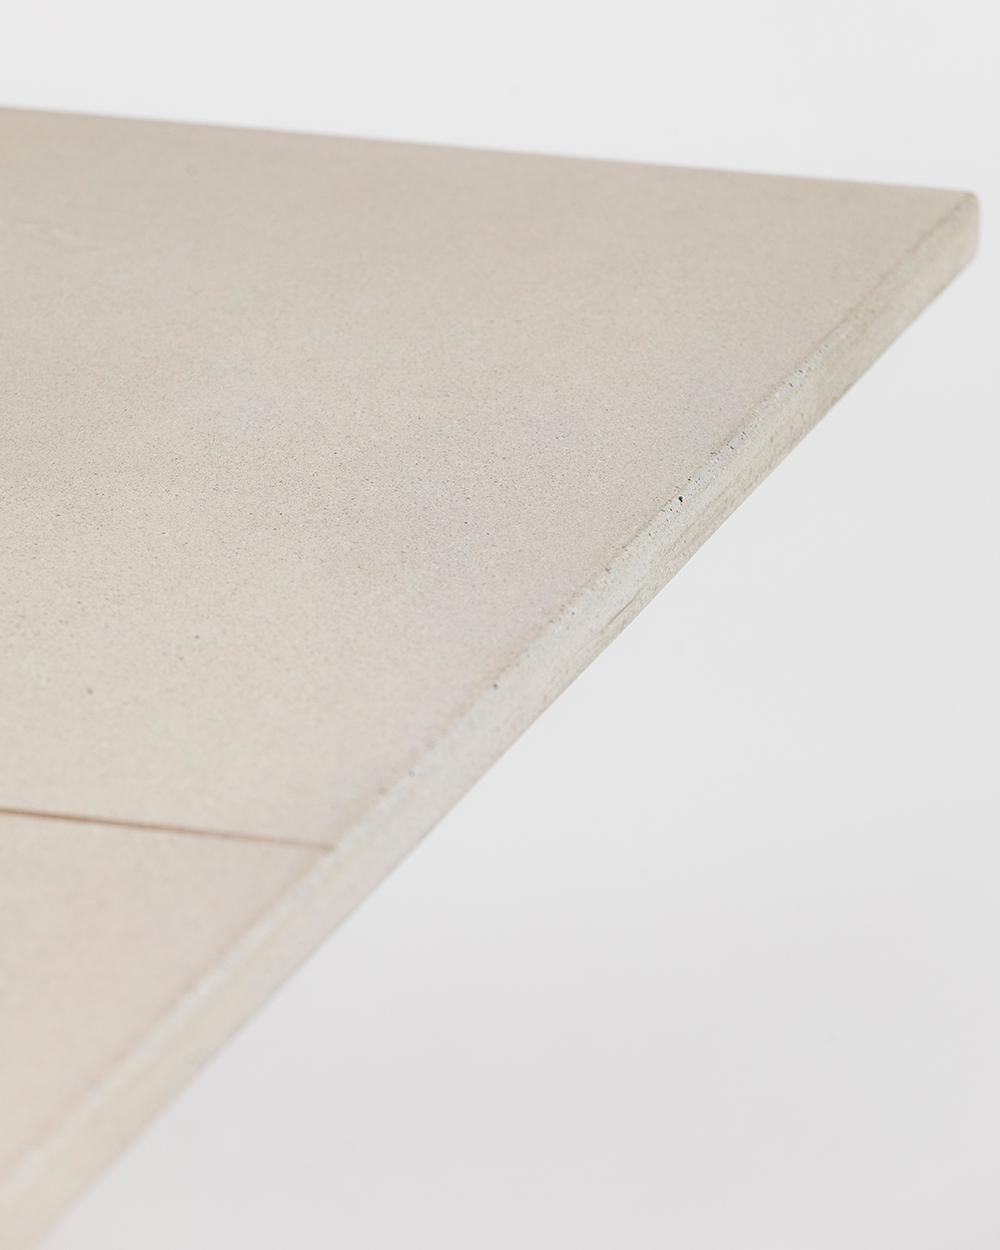 James de Wulf Vue Concrete Ping Pong-Tisch aus Beton, Edelstahlsockel – Standard (amerikanisch) im Angebot